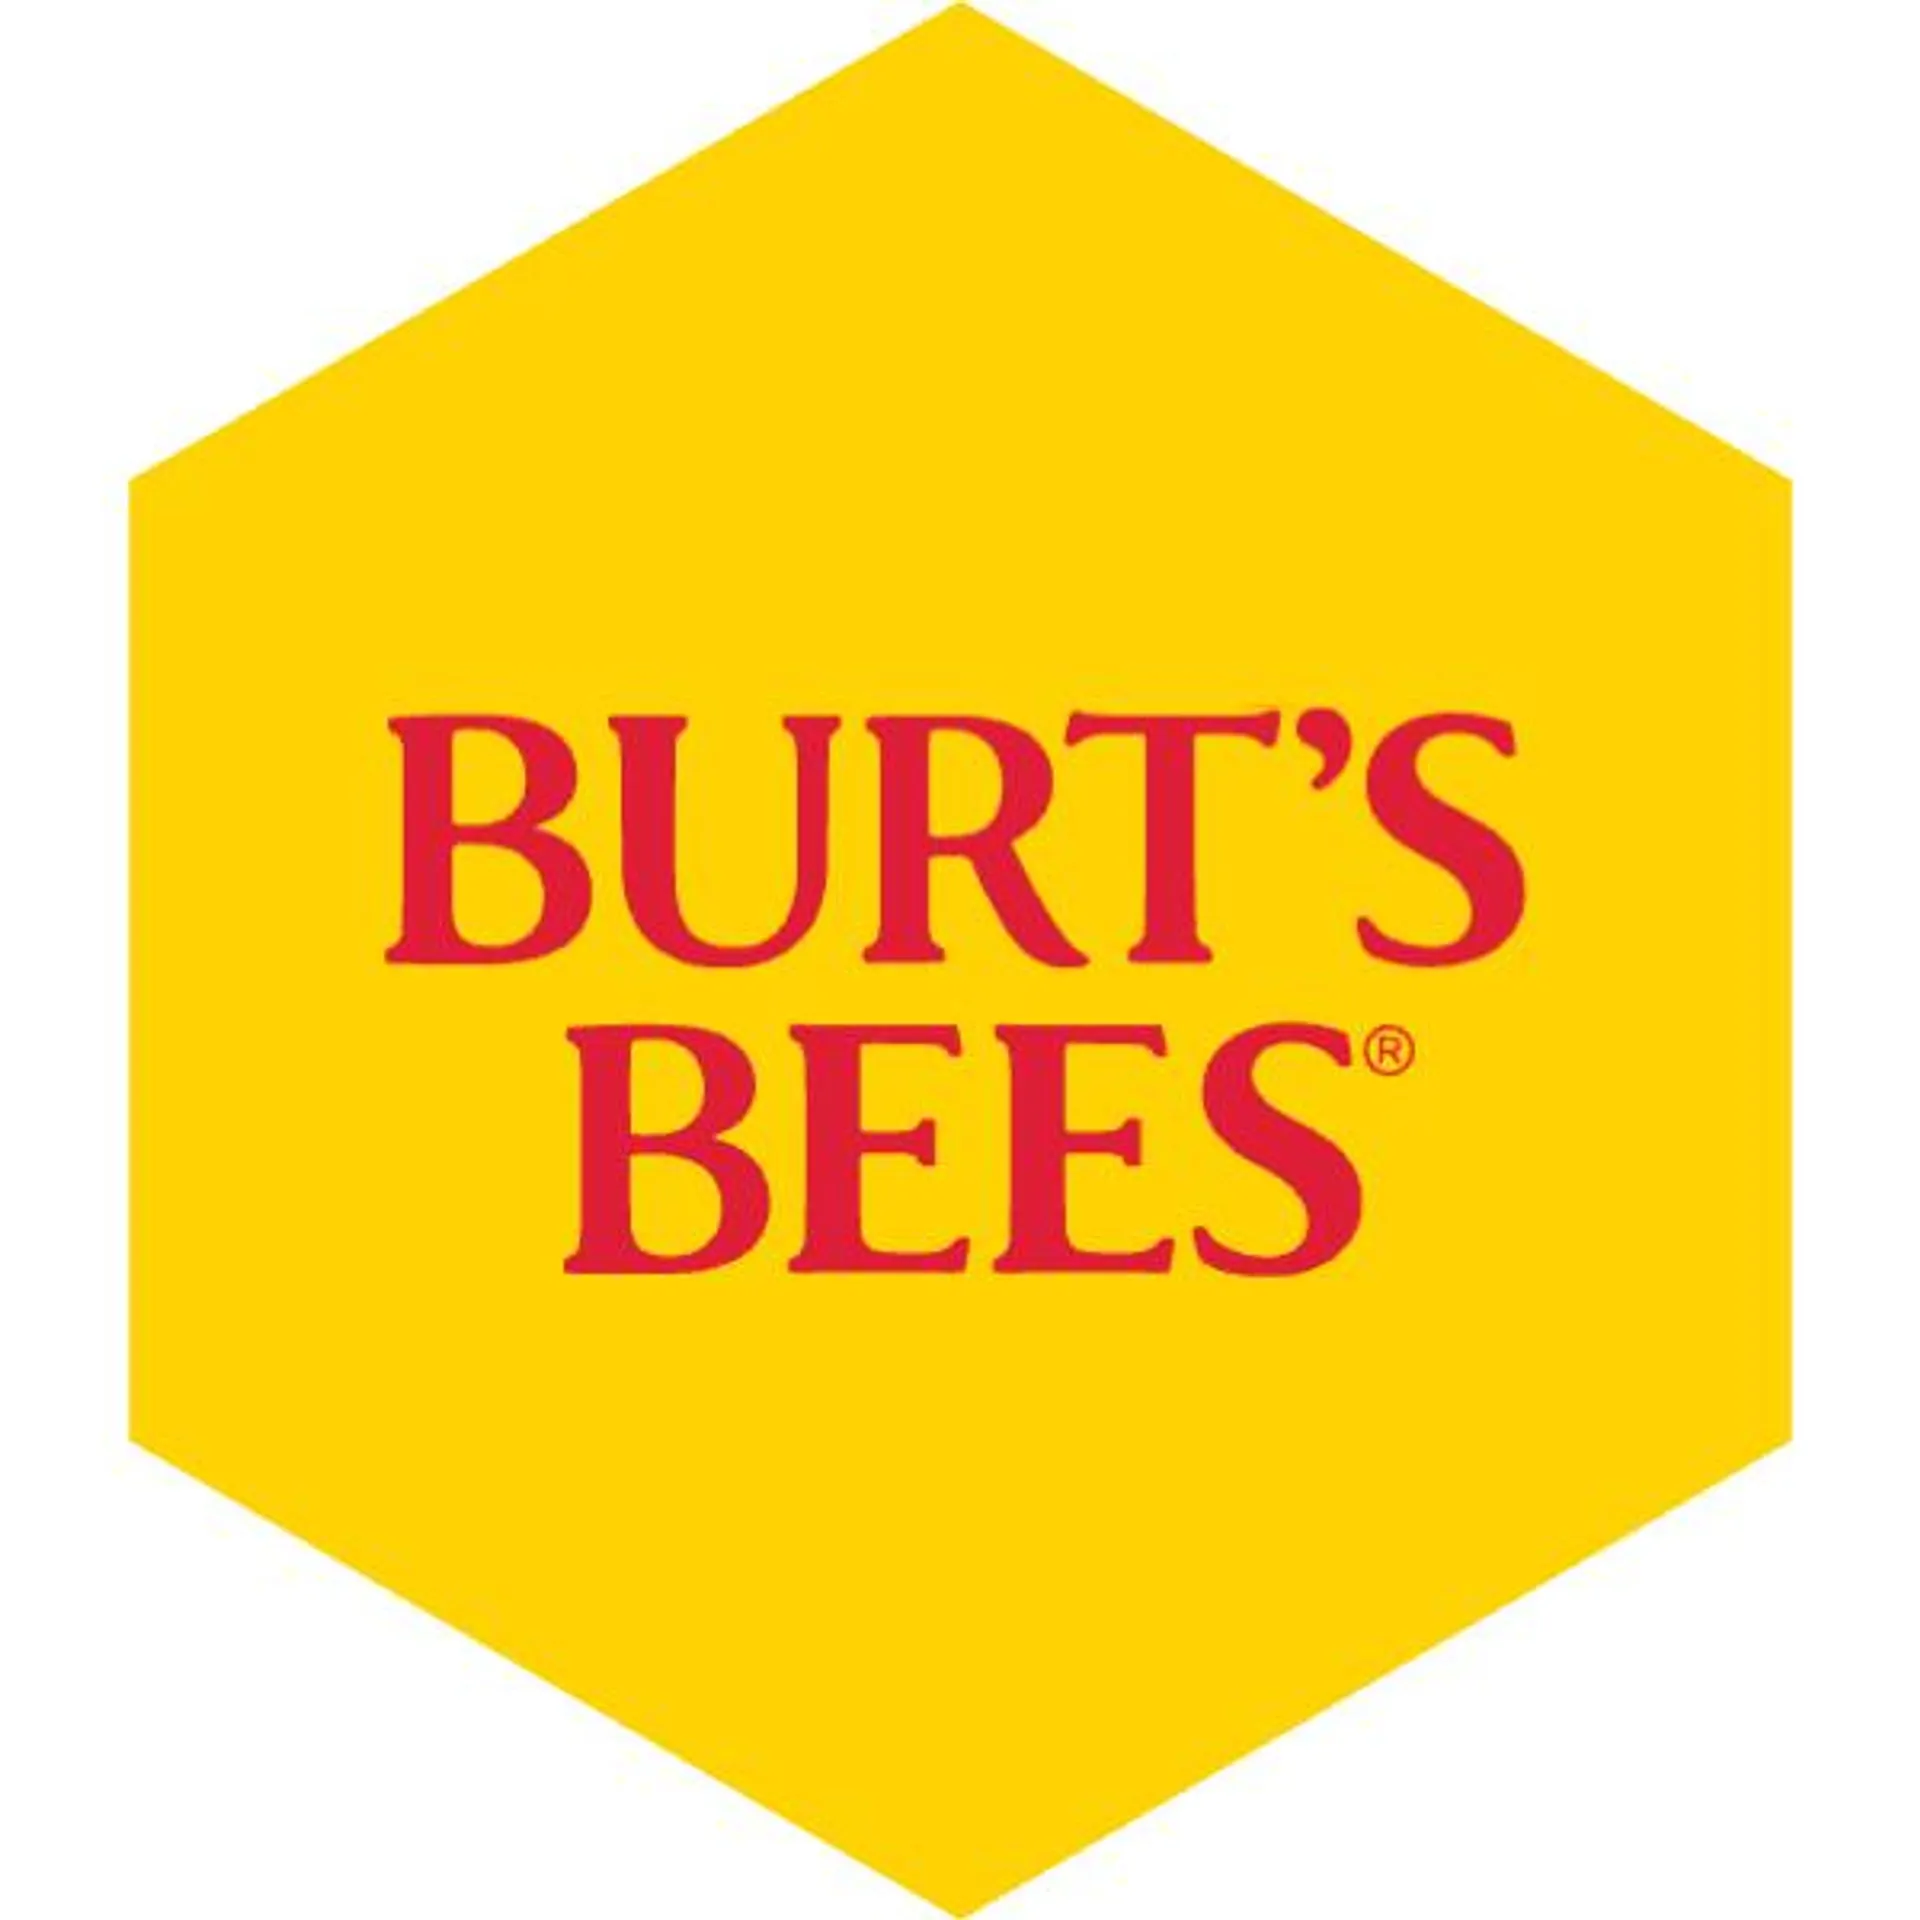 Essential Burt's Bees Kit